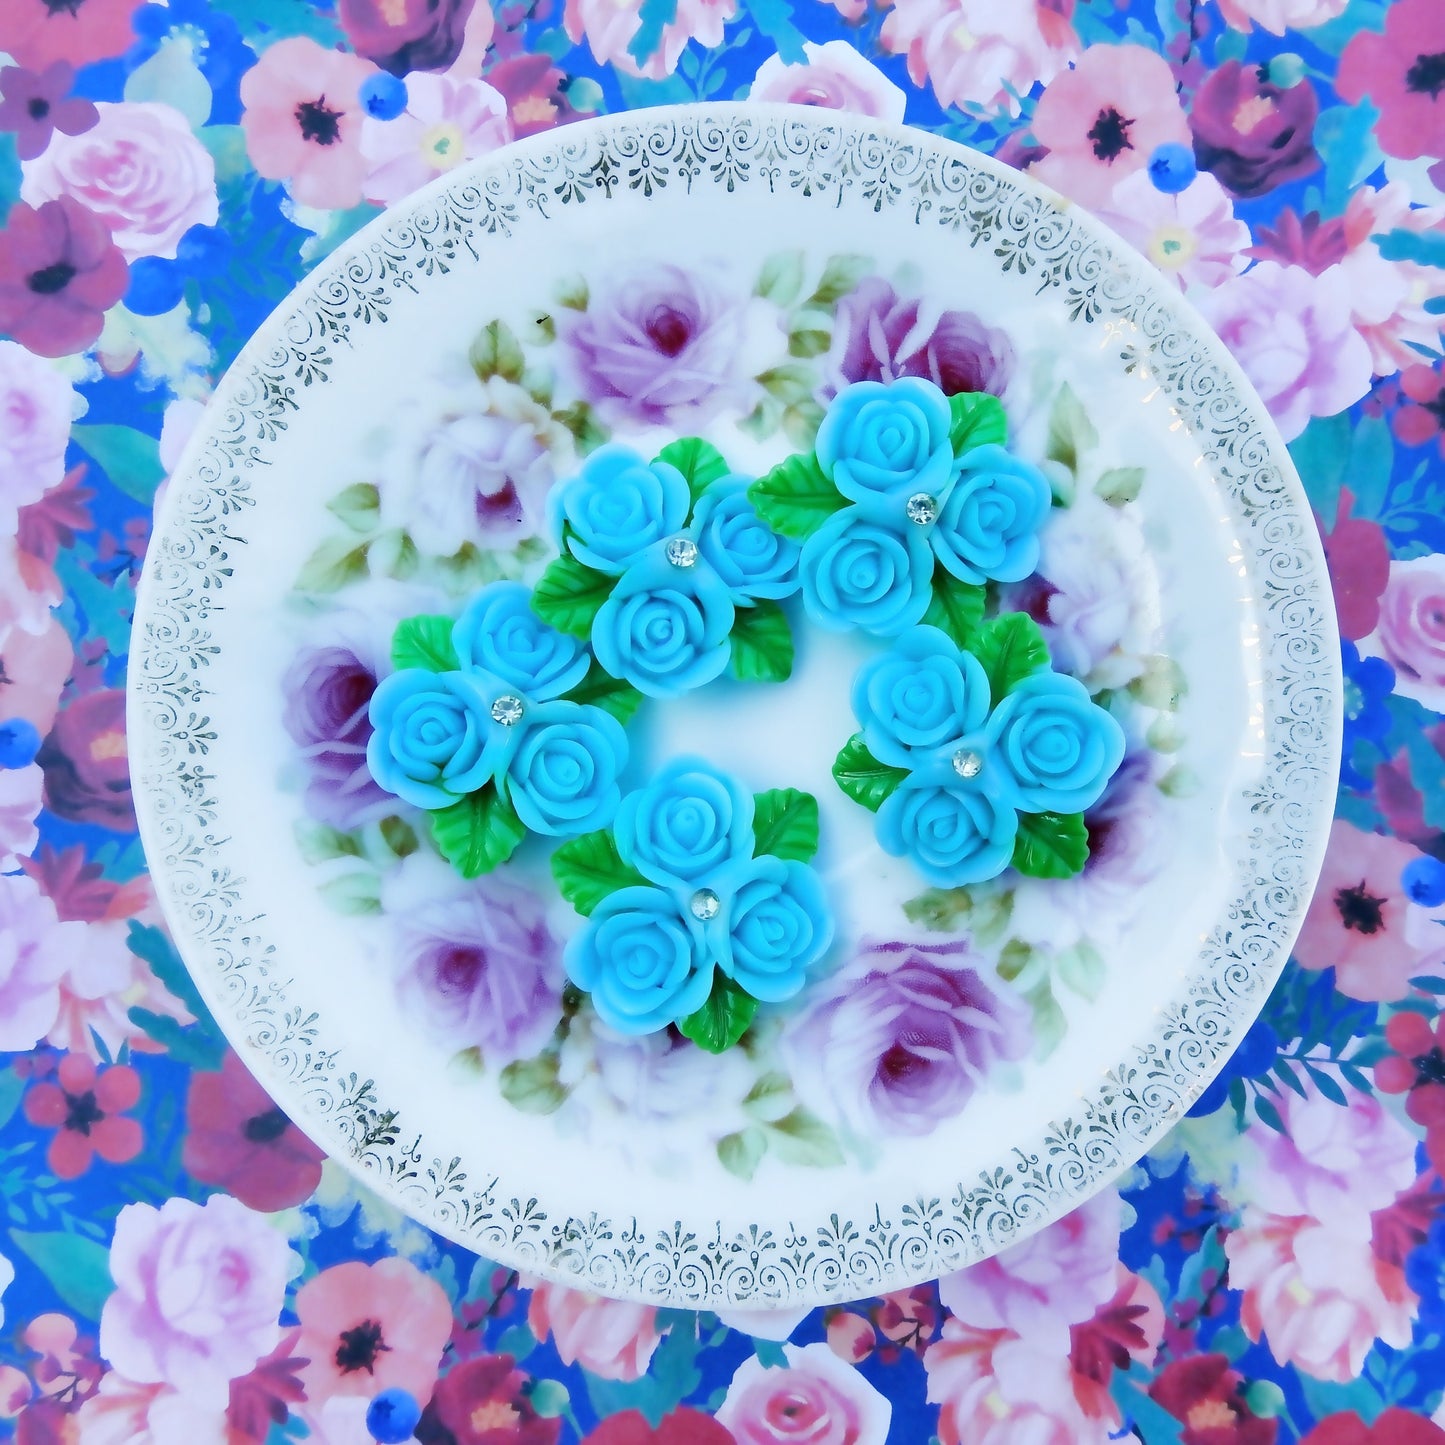 Large Blue Floral Buttons - Set of 5